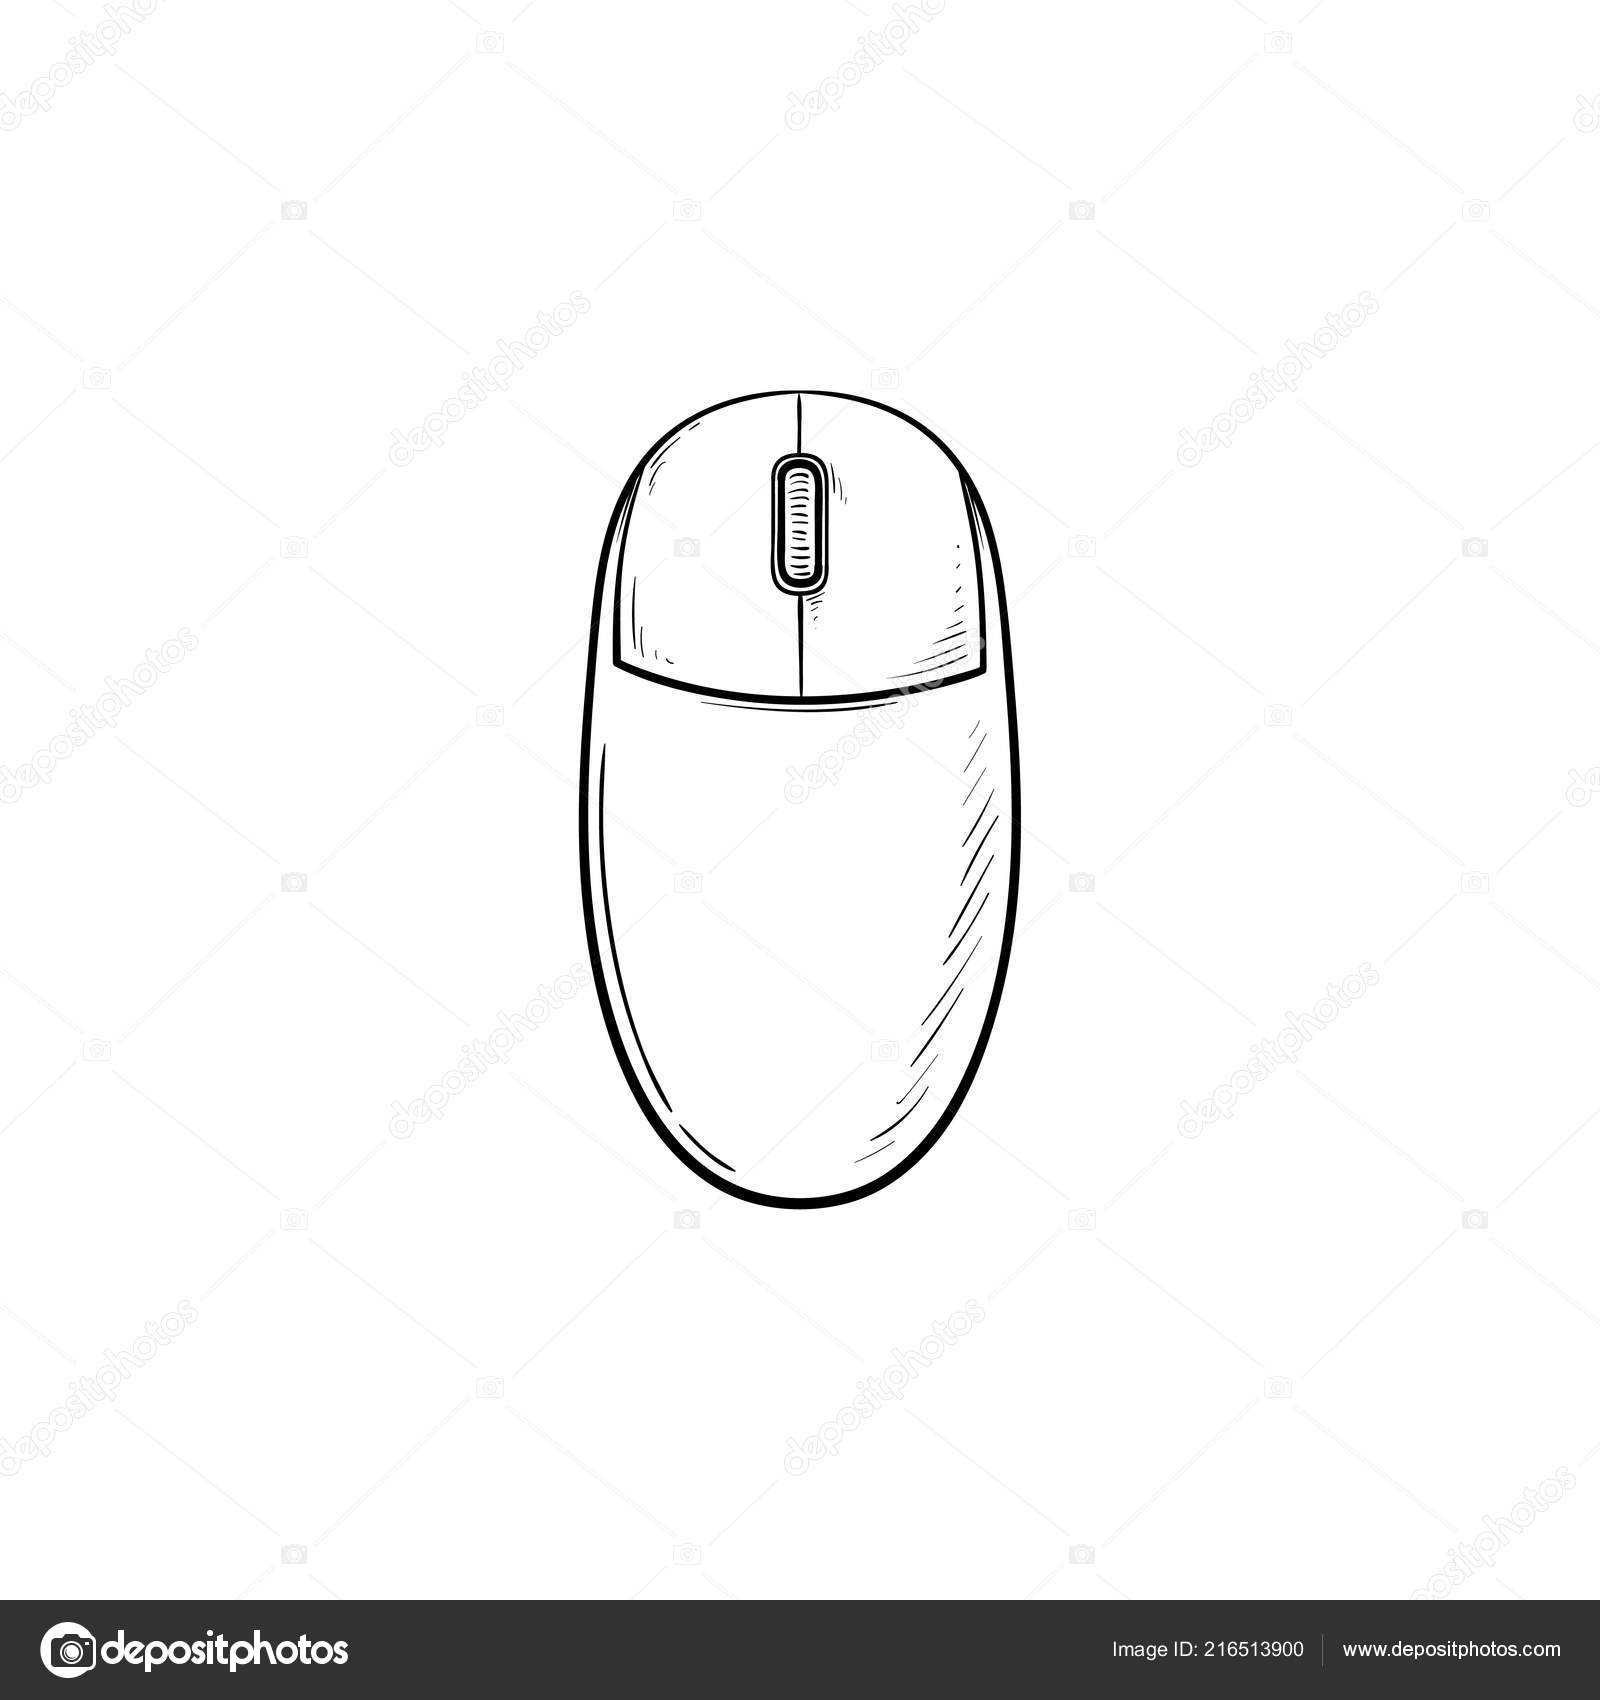 Computer Mouse Remote PNG Images & PSDs for Download | PixelSquid -  S112268163-saigonsouth.com.vn